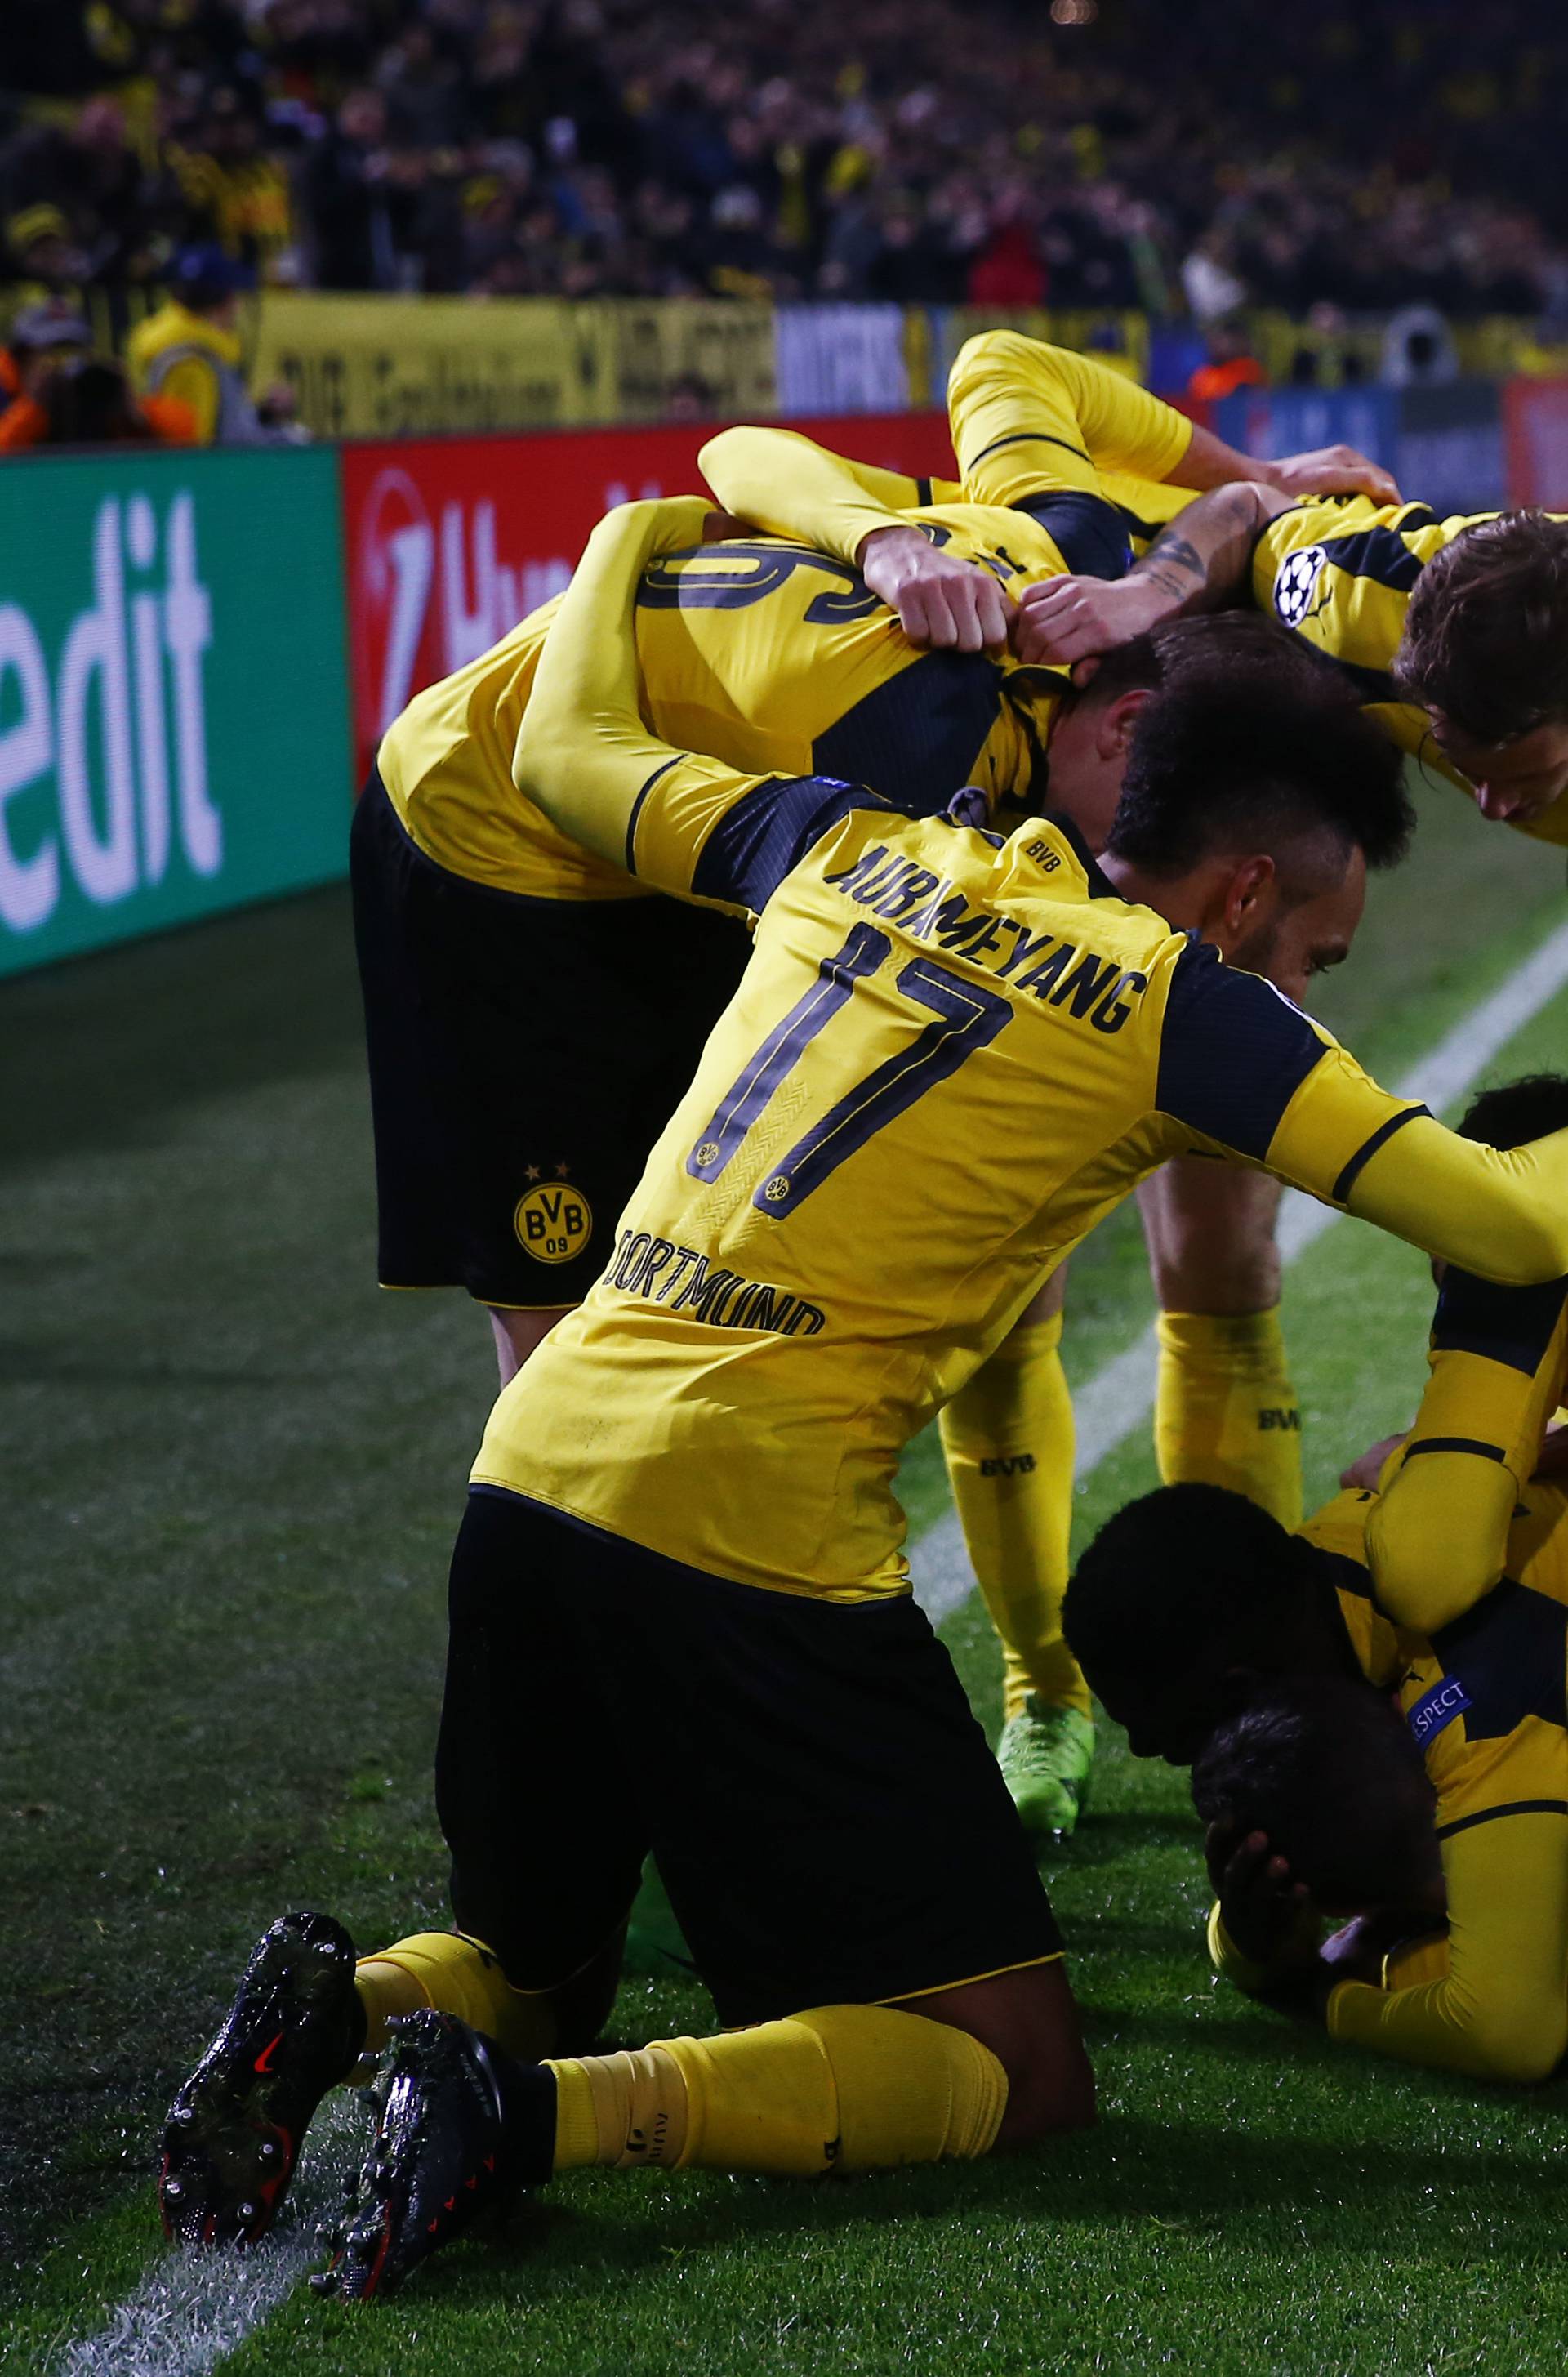 Borussia Dortmund's Christian Pulisic celebrates scoring their second goal with teammates